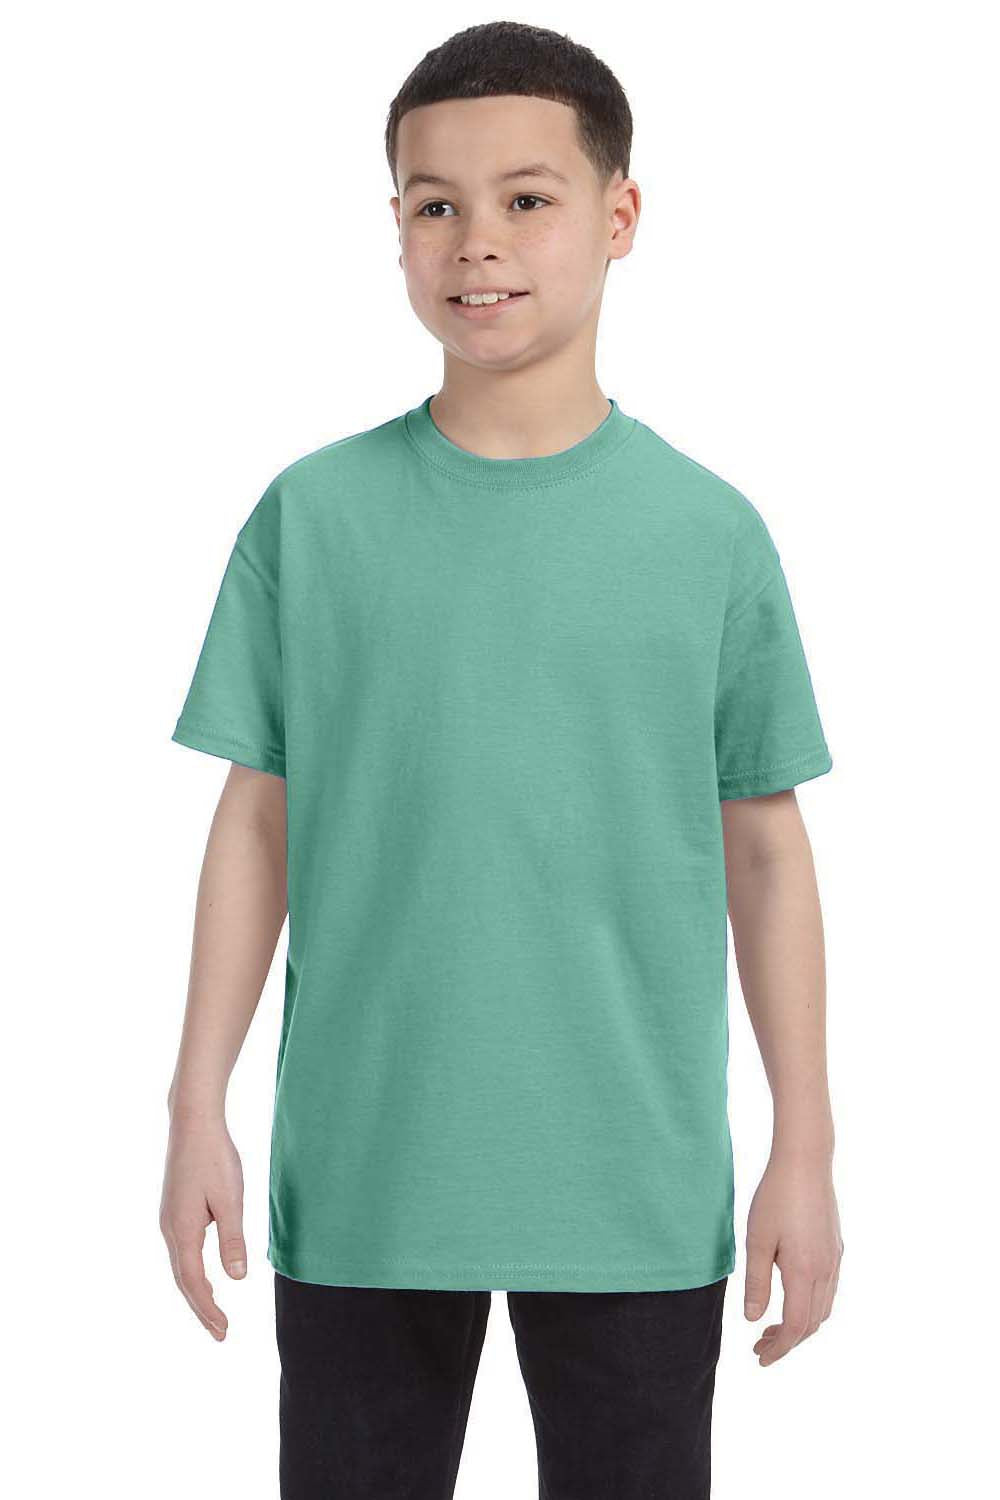 Hanes 54500 Youth ComfortSoft Short Sleeve Crewneck T-Shirt Mint Green Front